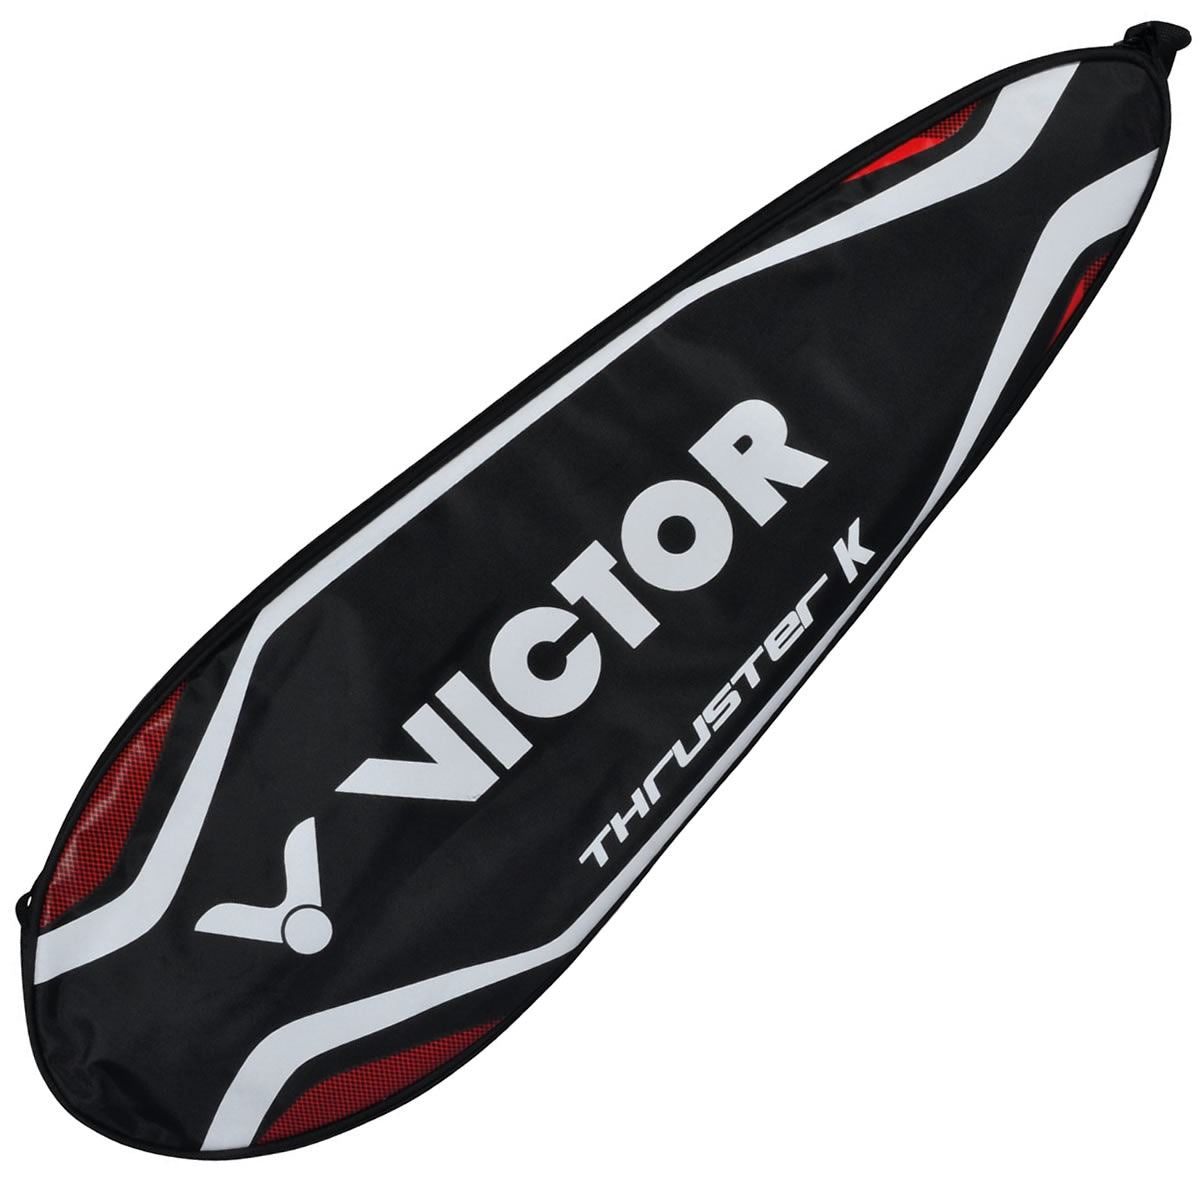 Victor Thruster K 330 Badminton Racket - Green Black